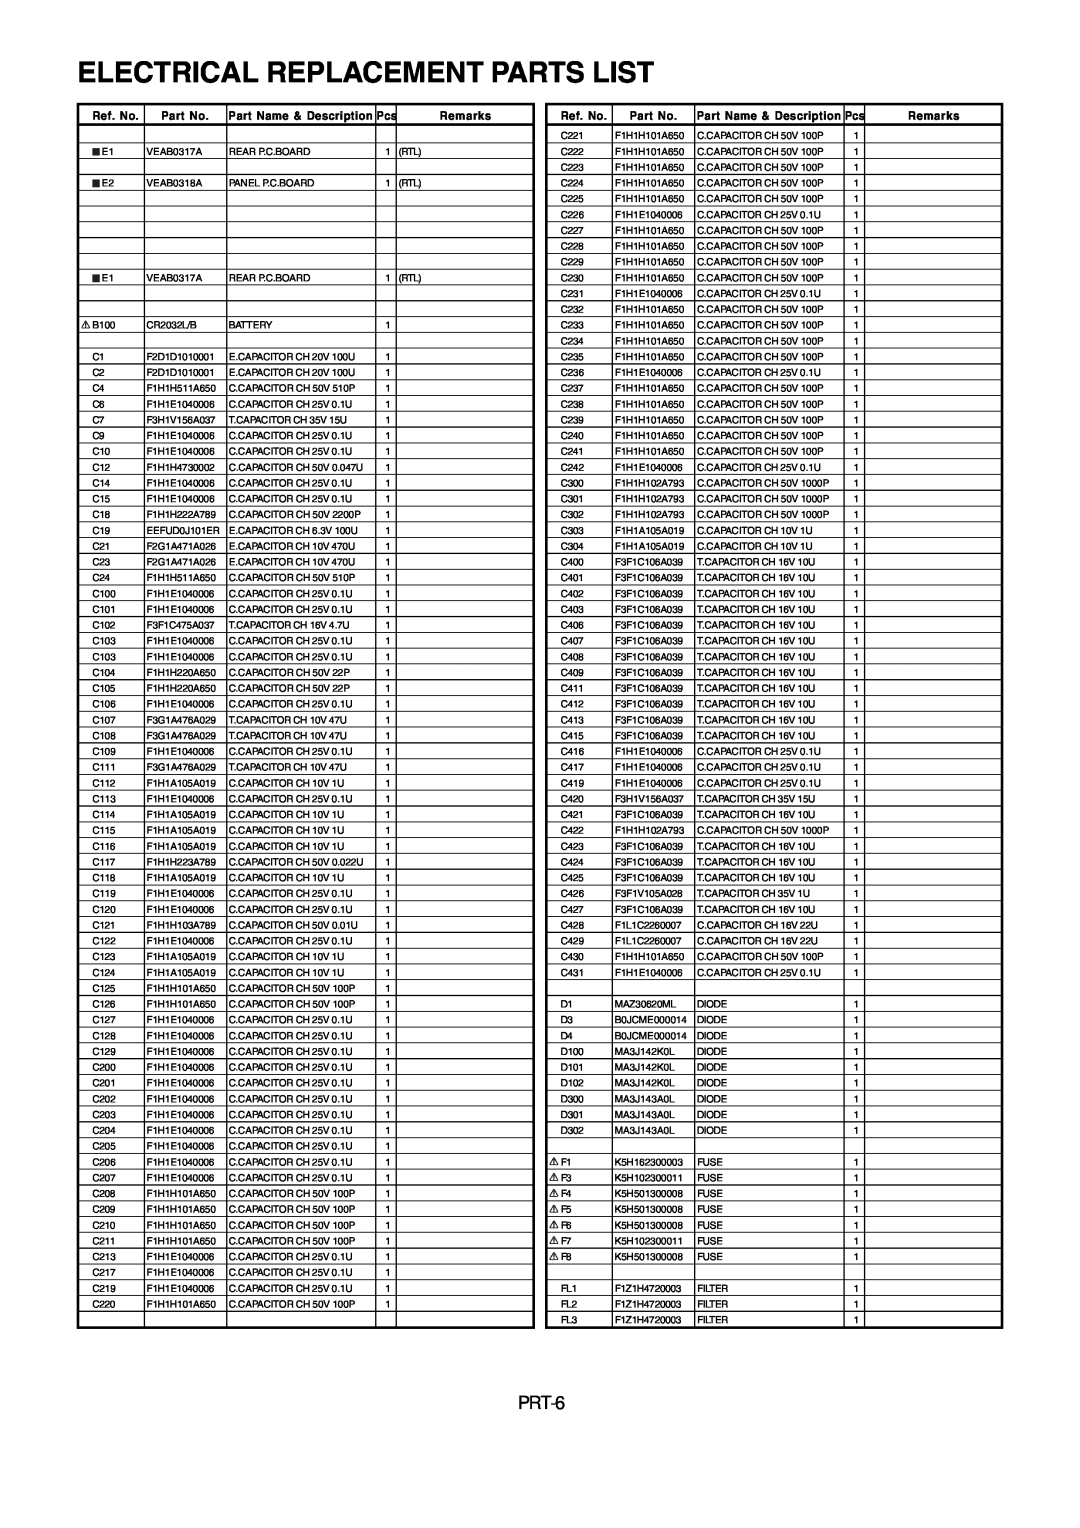 Panasonic AW-RP655N manual Electrical Replacement Parts List, PRT-6, Ref. No, Part Name & Description Pcs, Remarks 